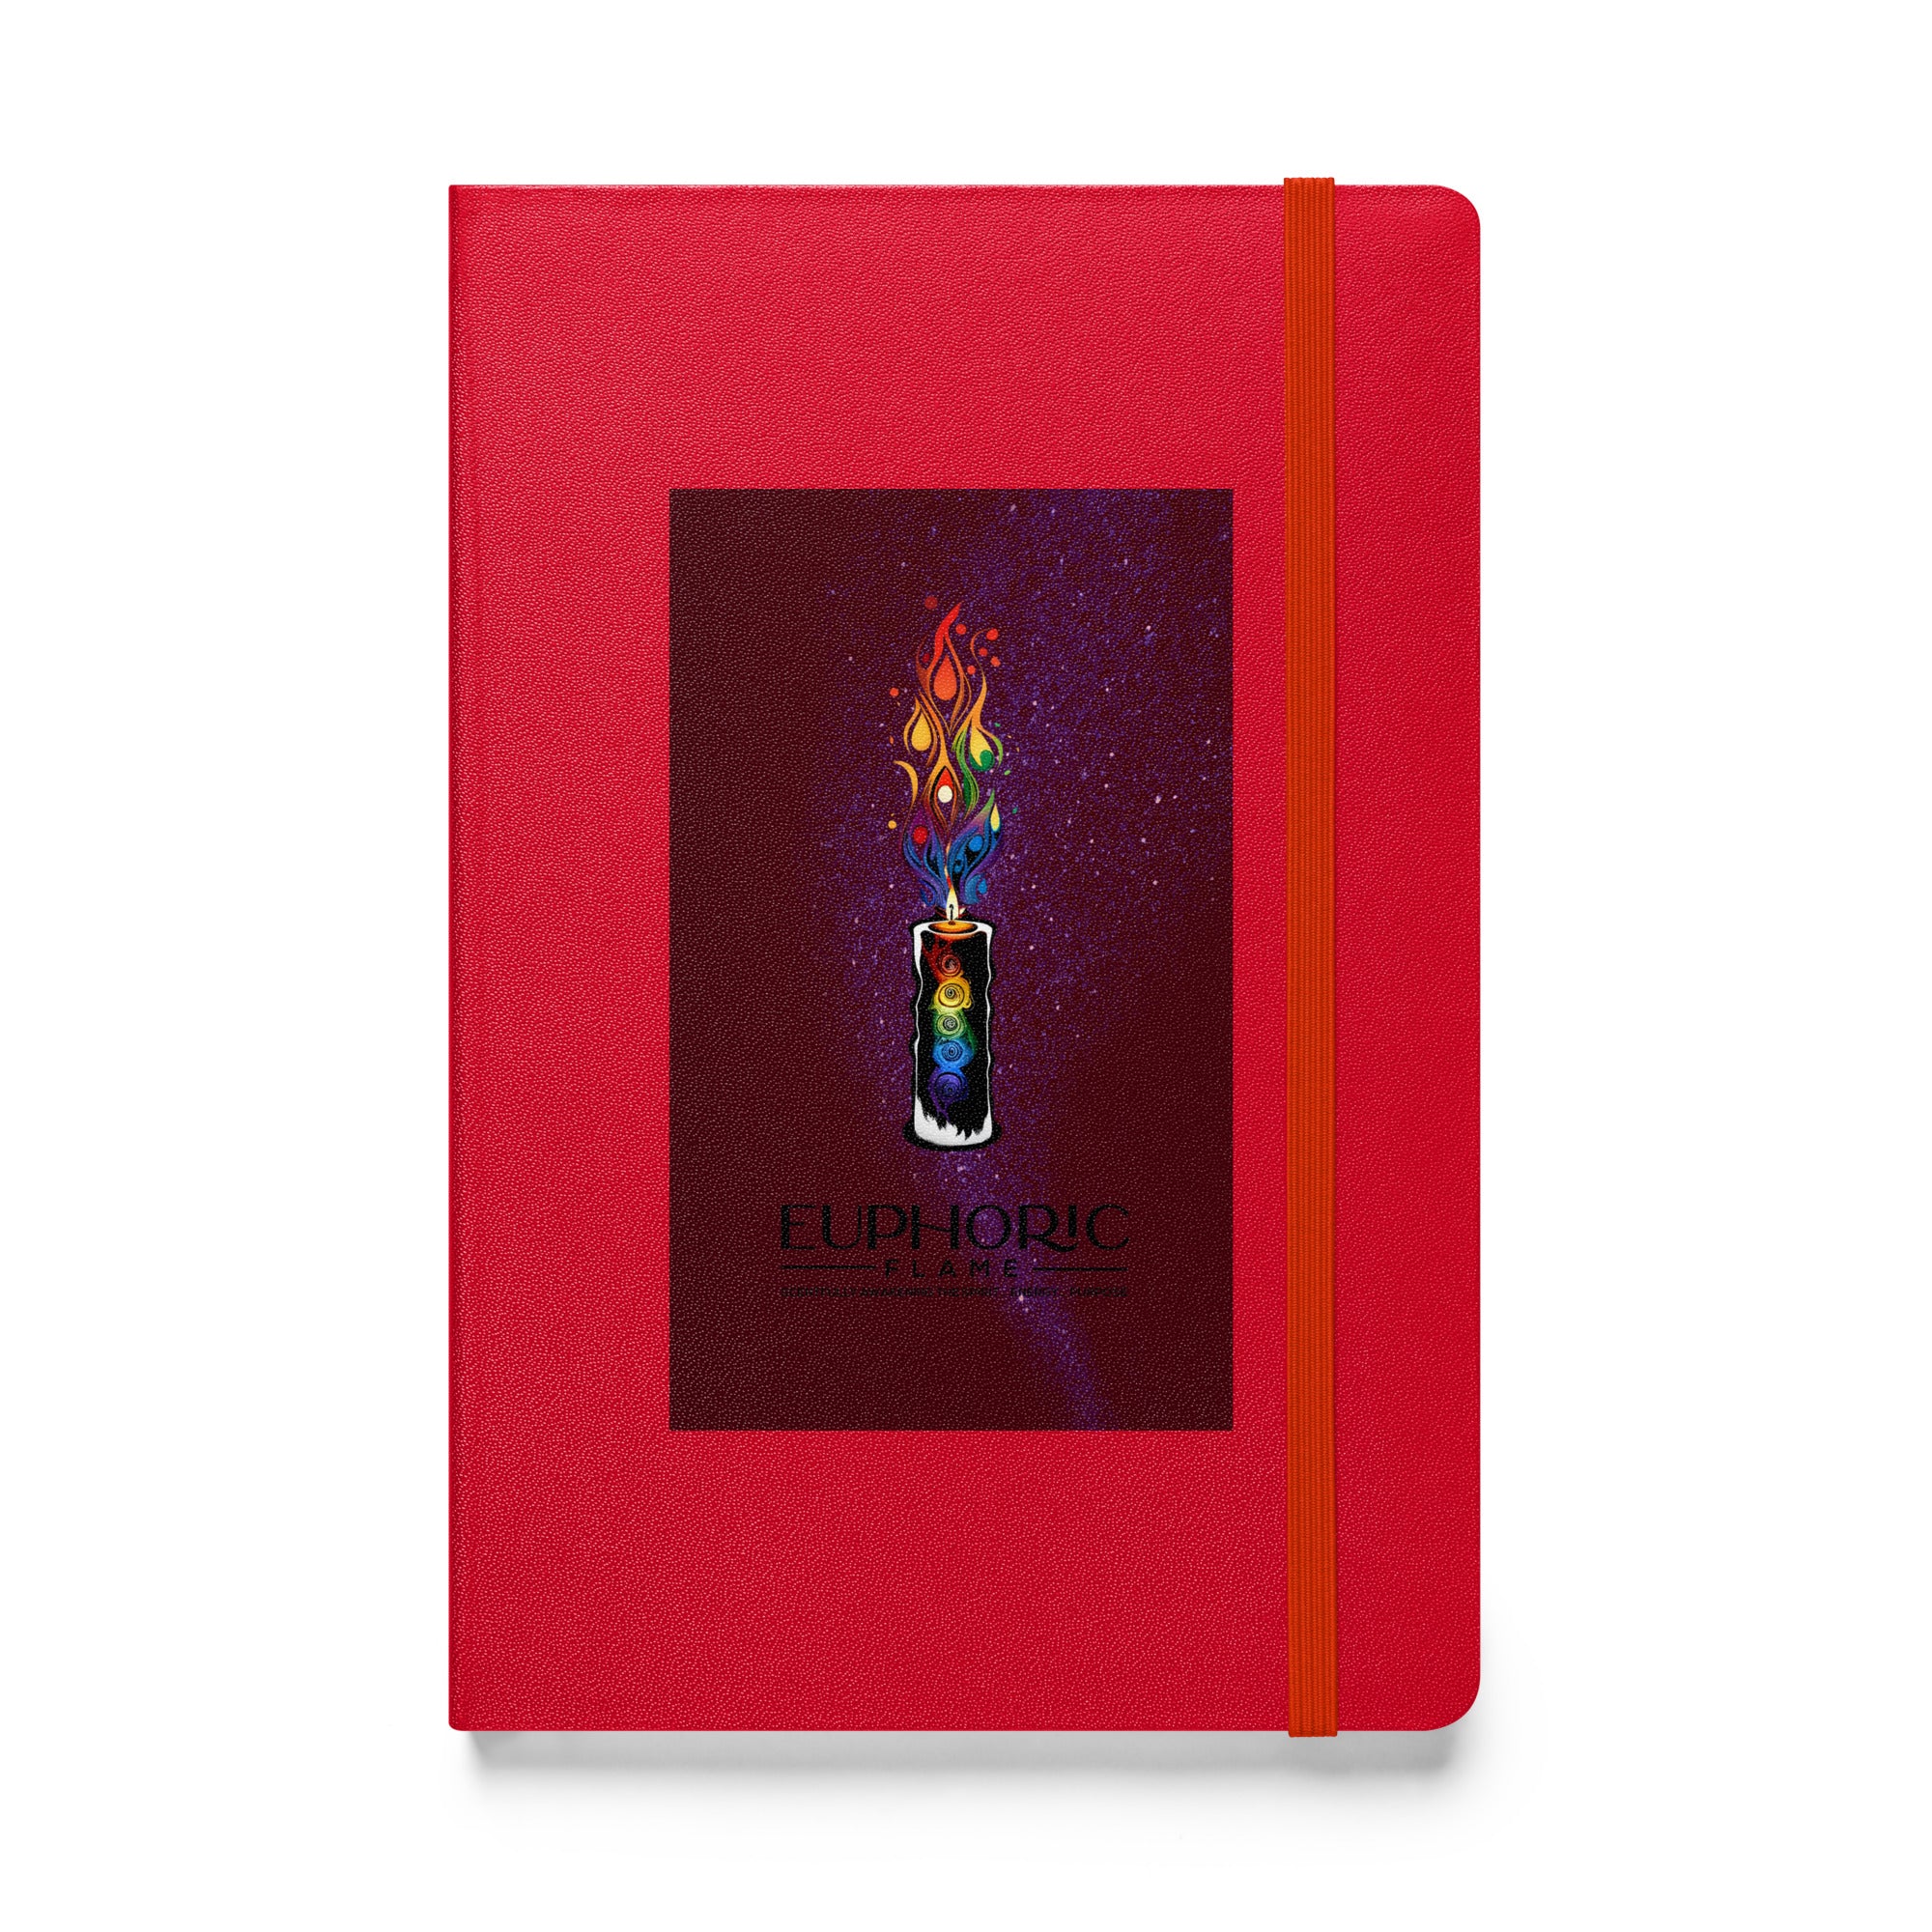 Euphoric Flame Hardcover bound notebook